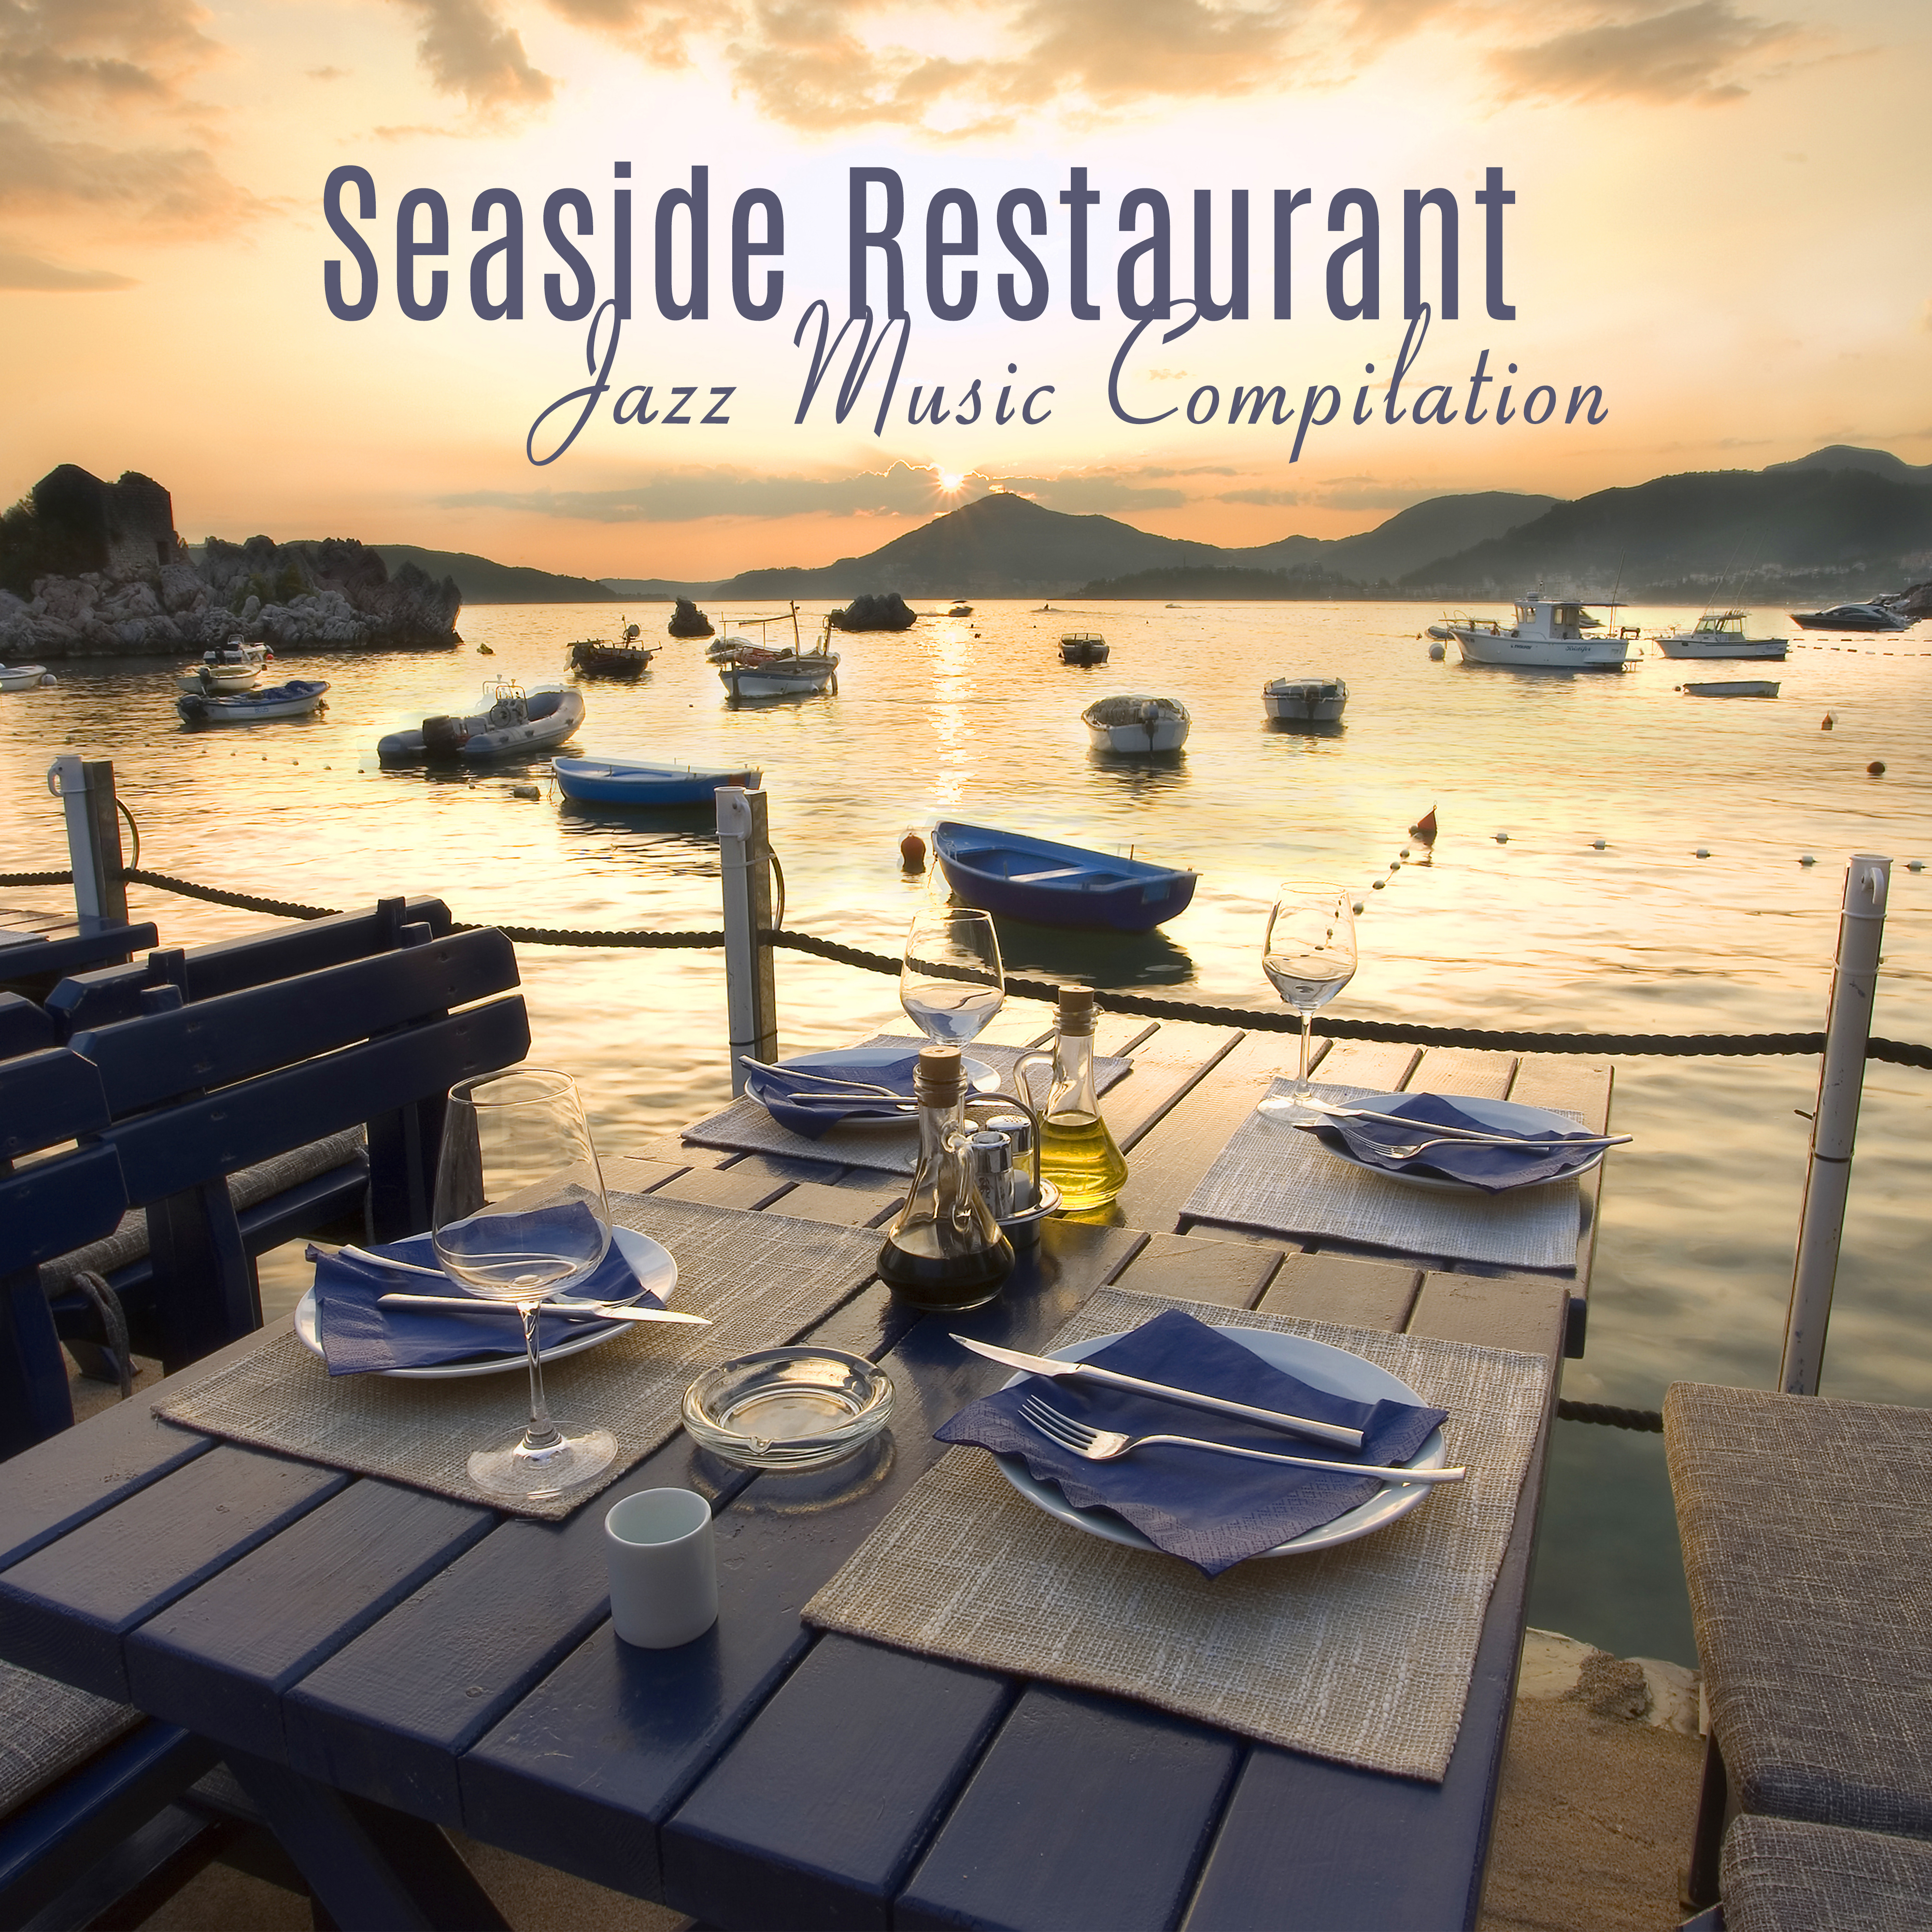 Seaside Restaurant Jazz Music Compilation